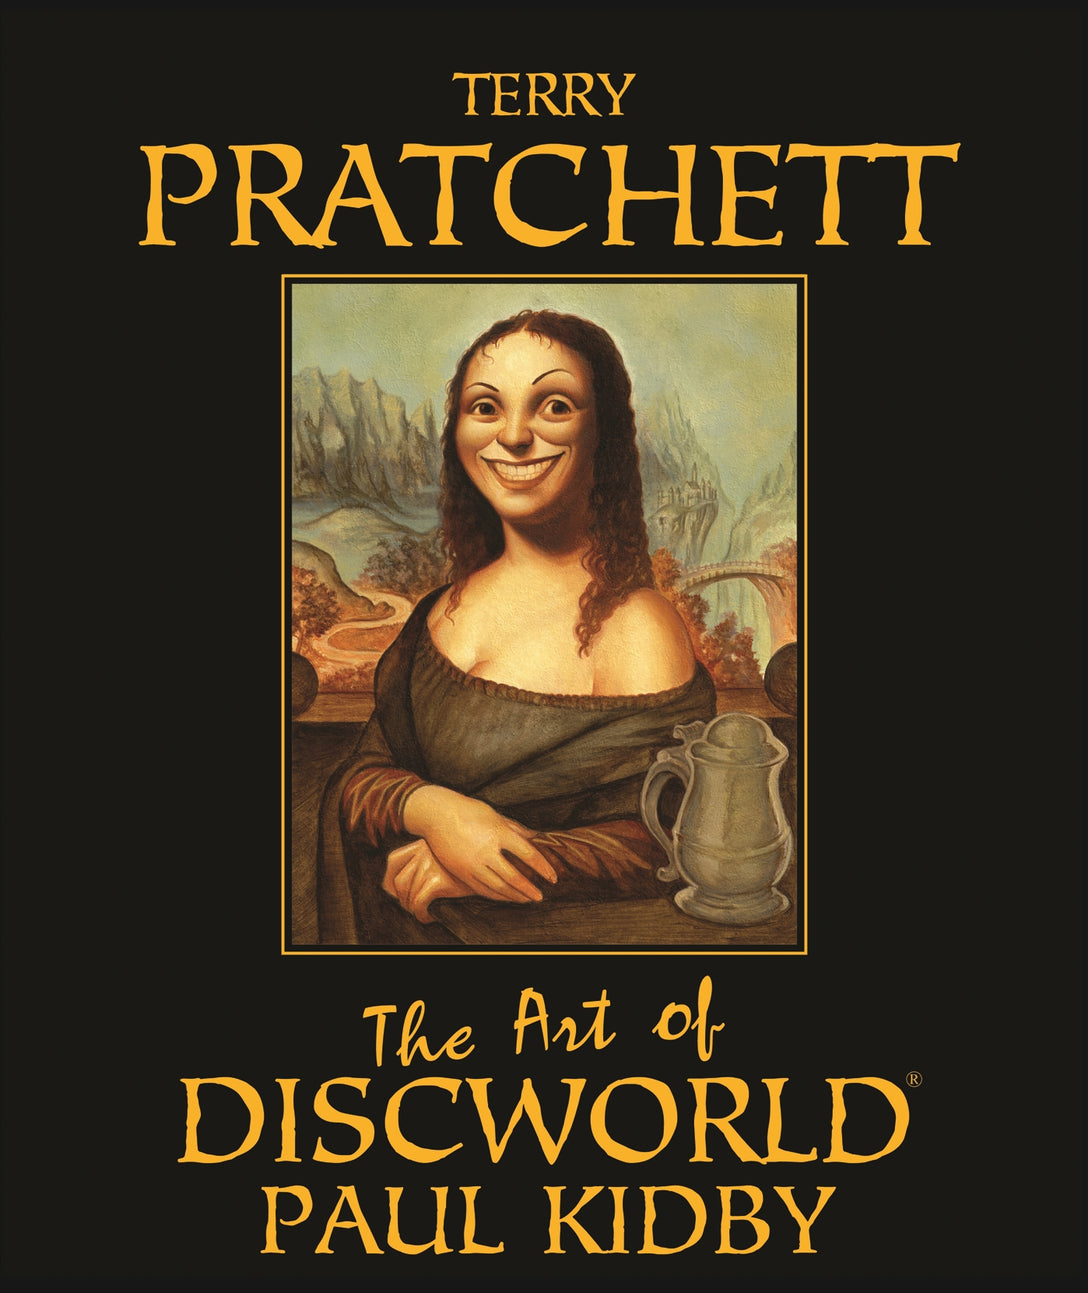 The Art of Discworld by Paul Kidby, Terry Pratchett